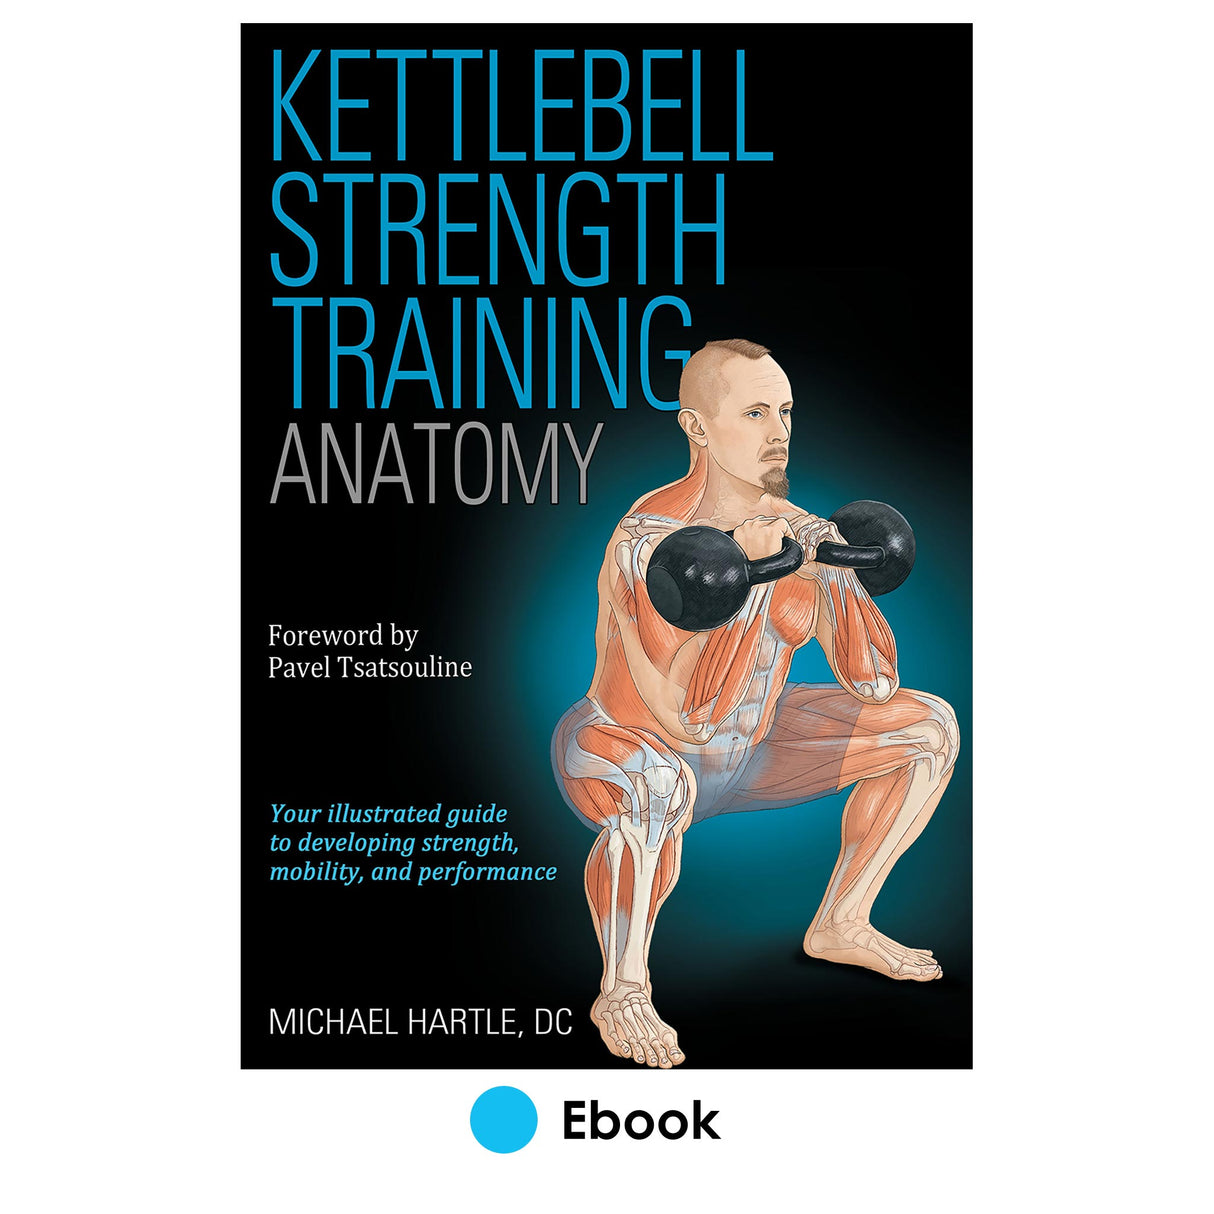 Kettlebell Strength Training Anatomy epub